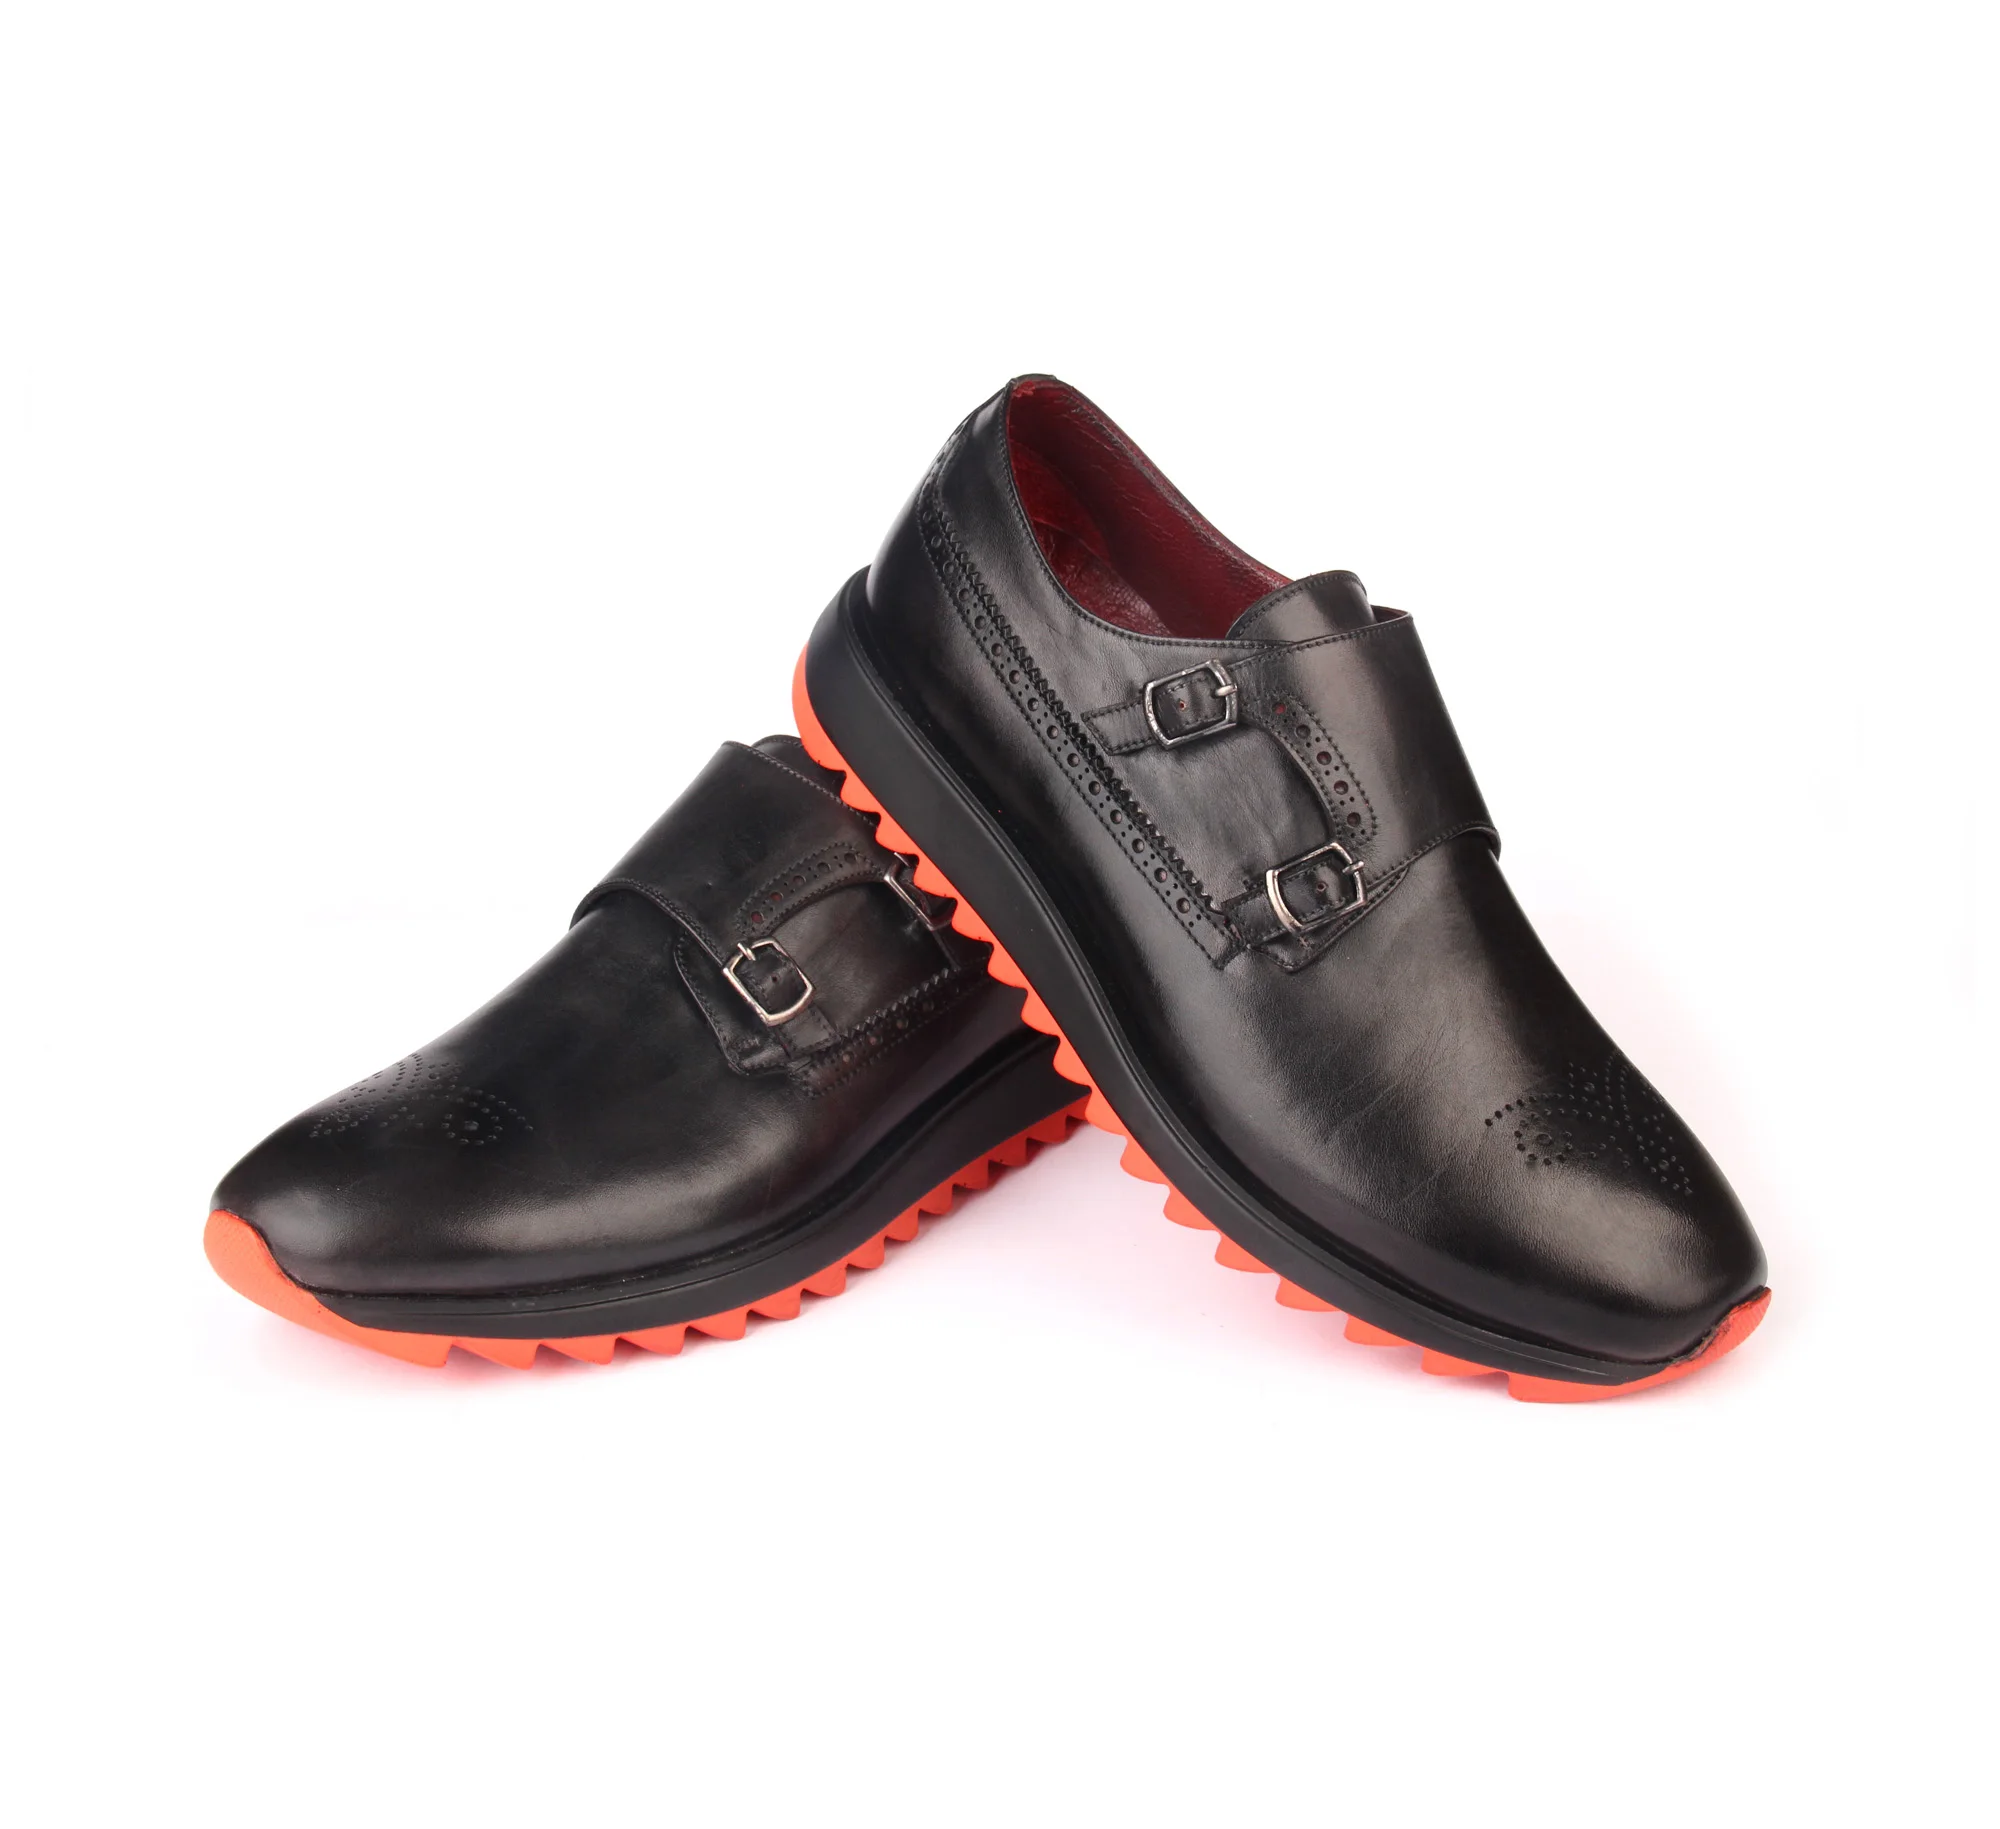 

Handmade Black Casual Double Monk Strap Shoes with Orange Lightweight EVA Sole, Genuine Calf Skin Leather, Medallion Toe, Men's